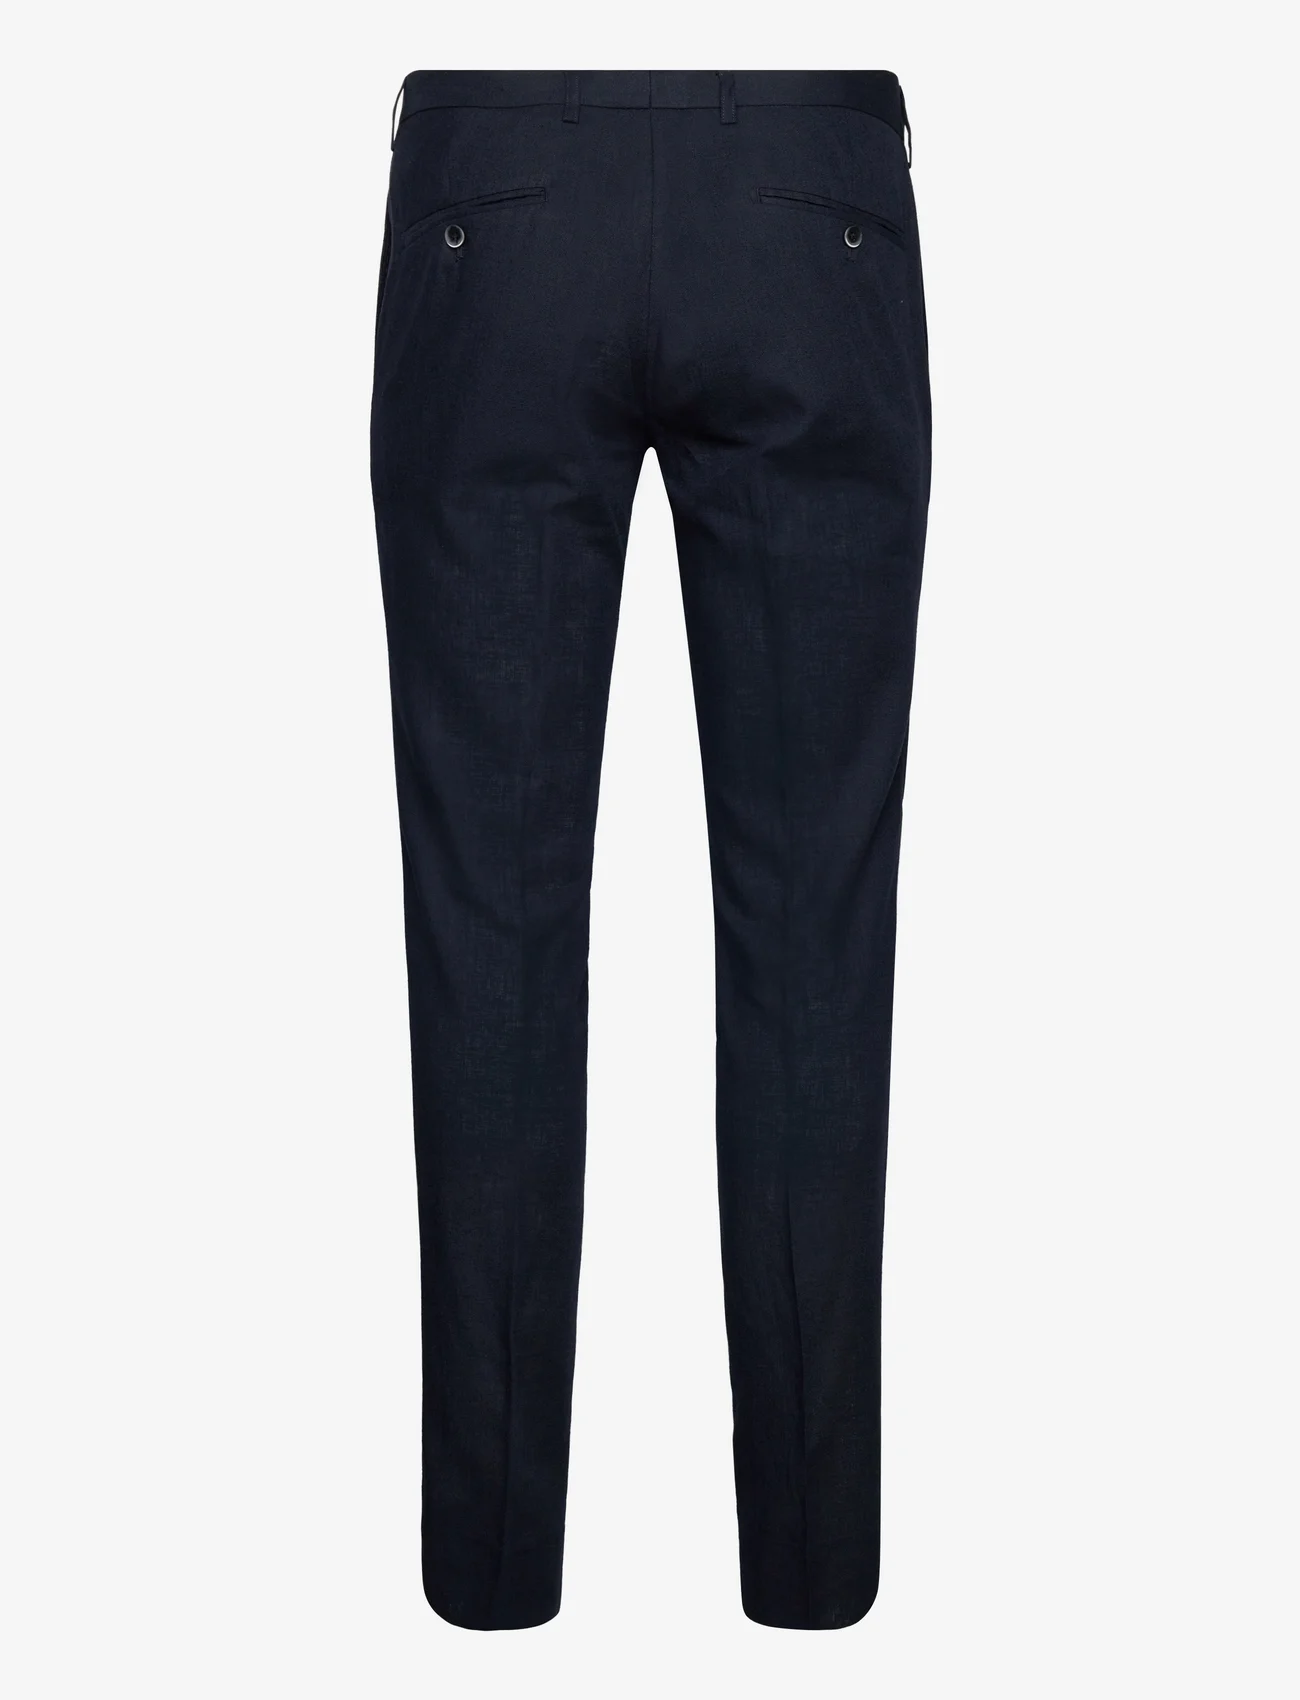 Bruun & Stengade - BS Pollino Classic Fit Suit Pants - linen trousers - navy - 1